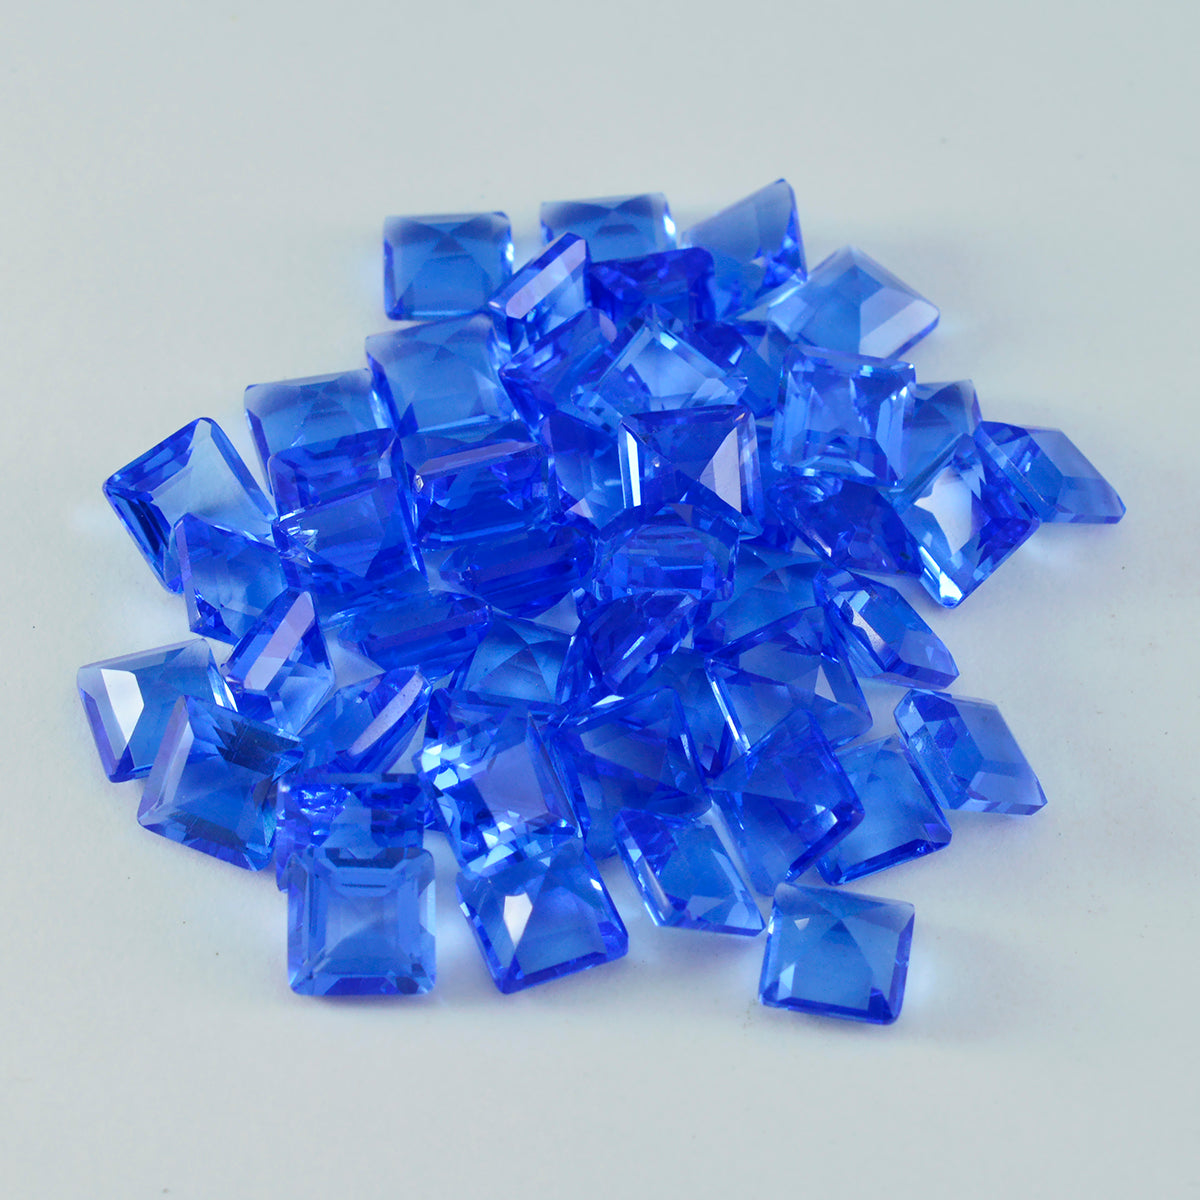 Riyogems 1PC blauwe saffier CZ gefacetteerd 6x6 mm vierkante vorm mooie kwaliteit edelsteen